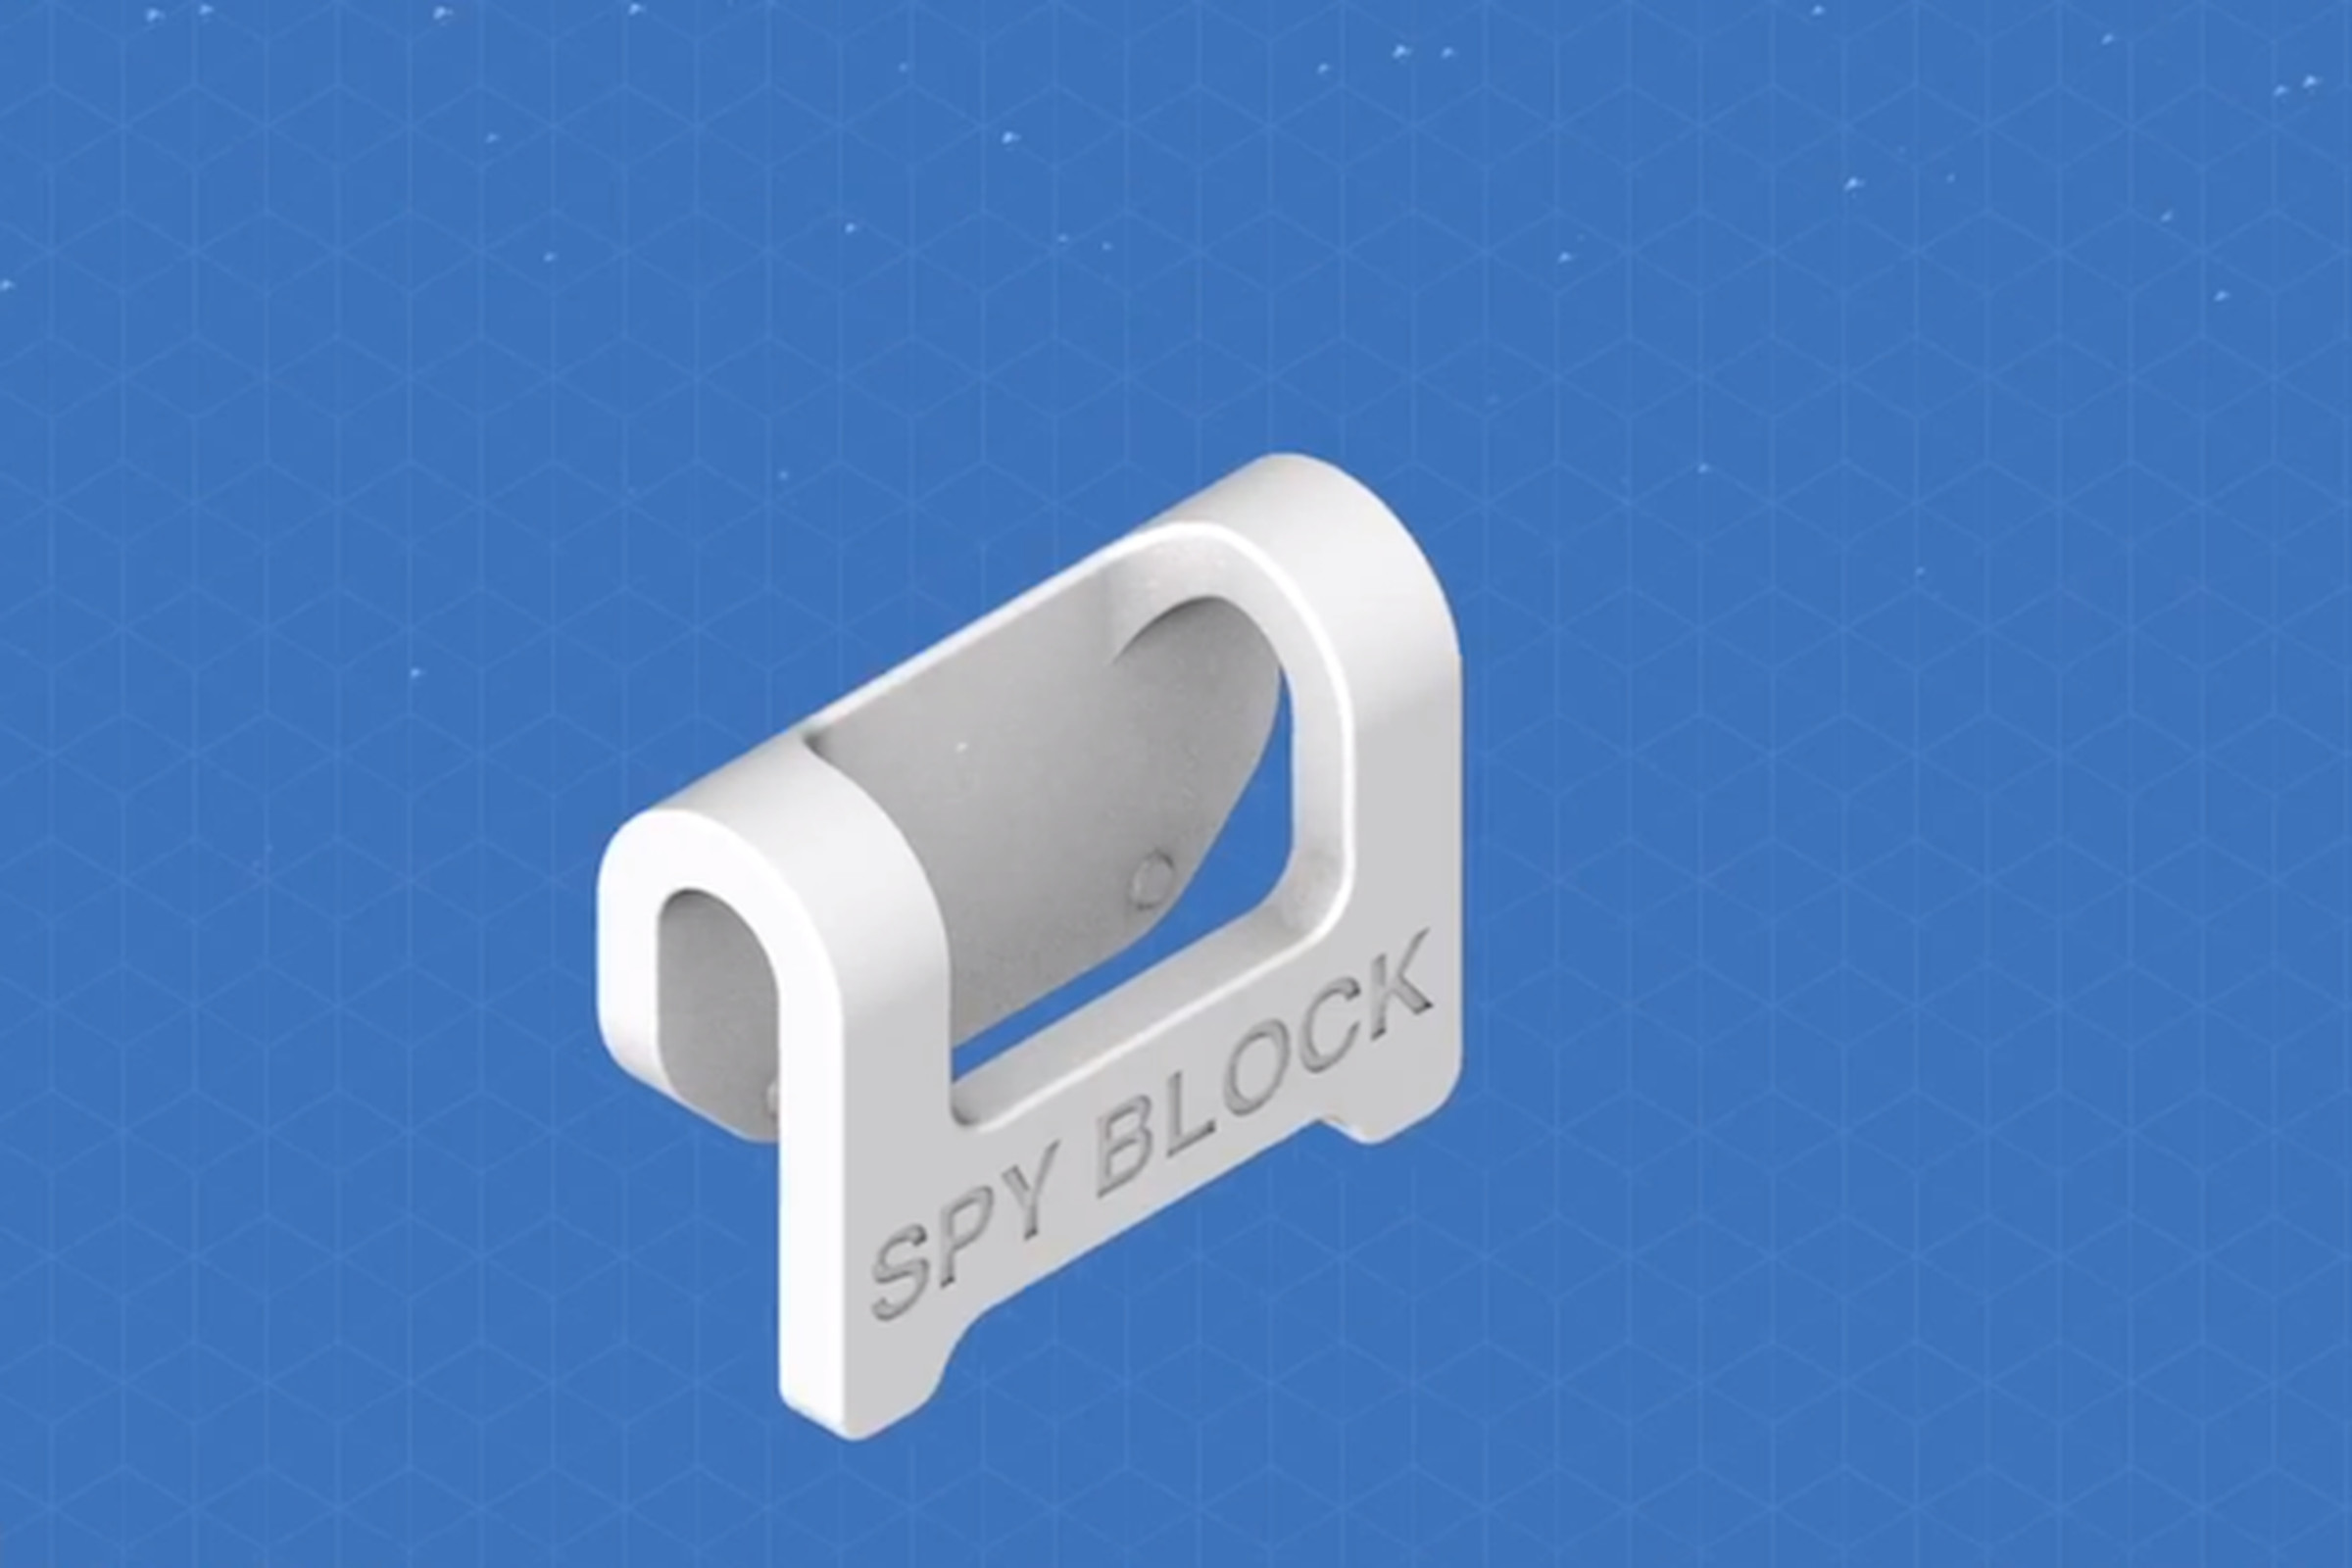 moot spy block